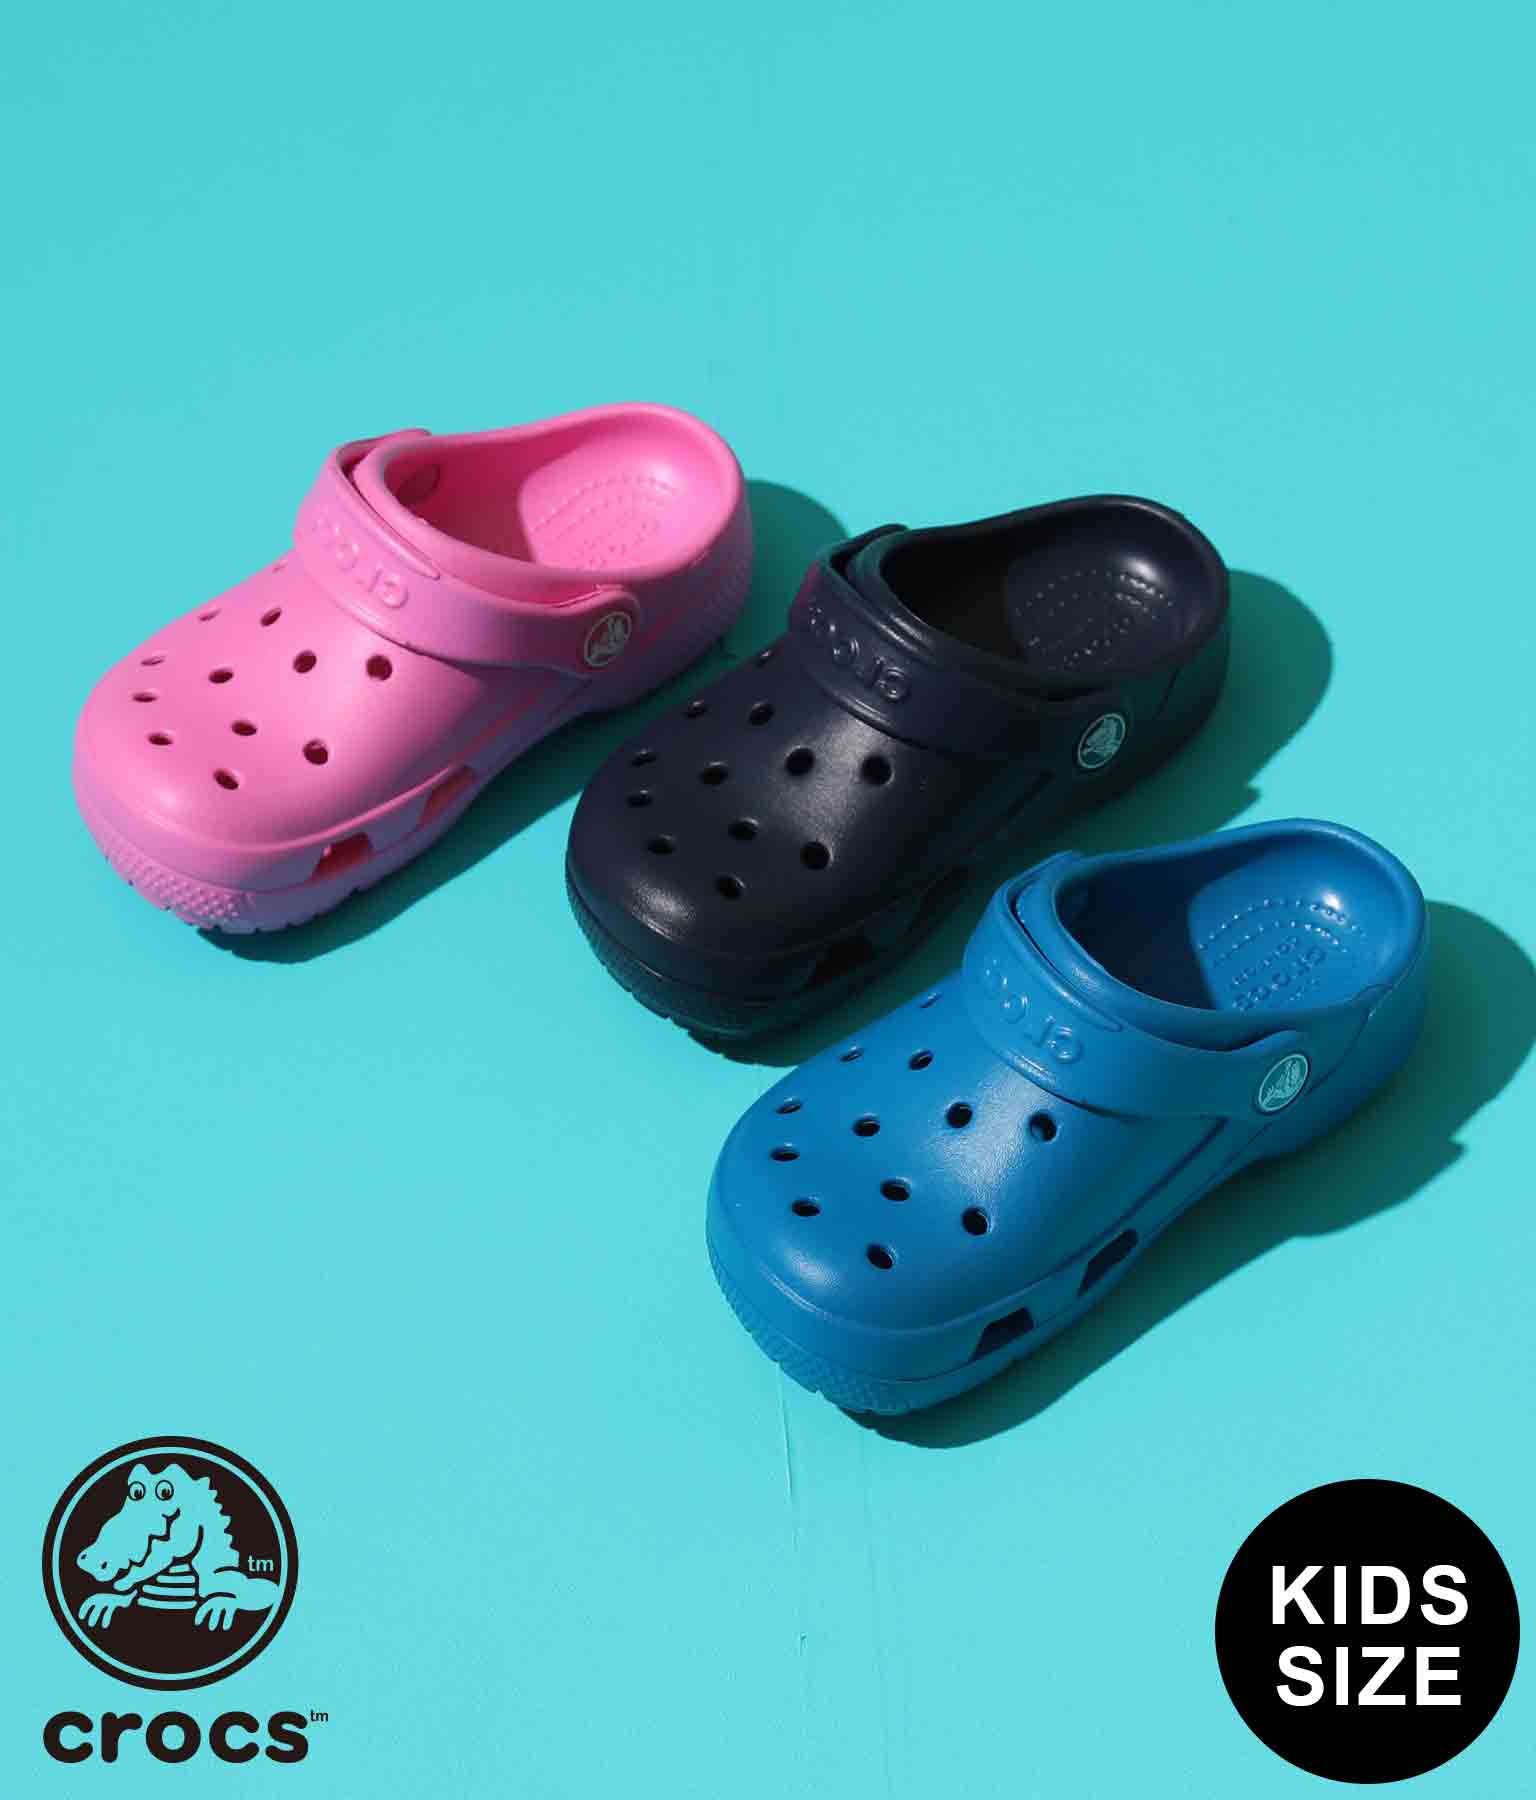 crocs for kids size 1